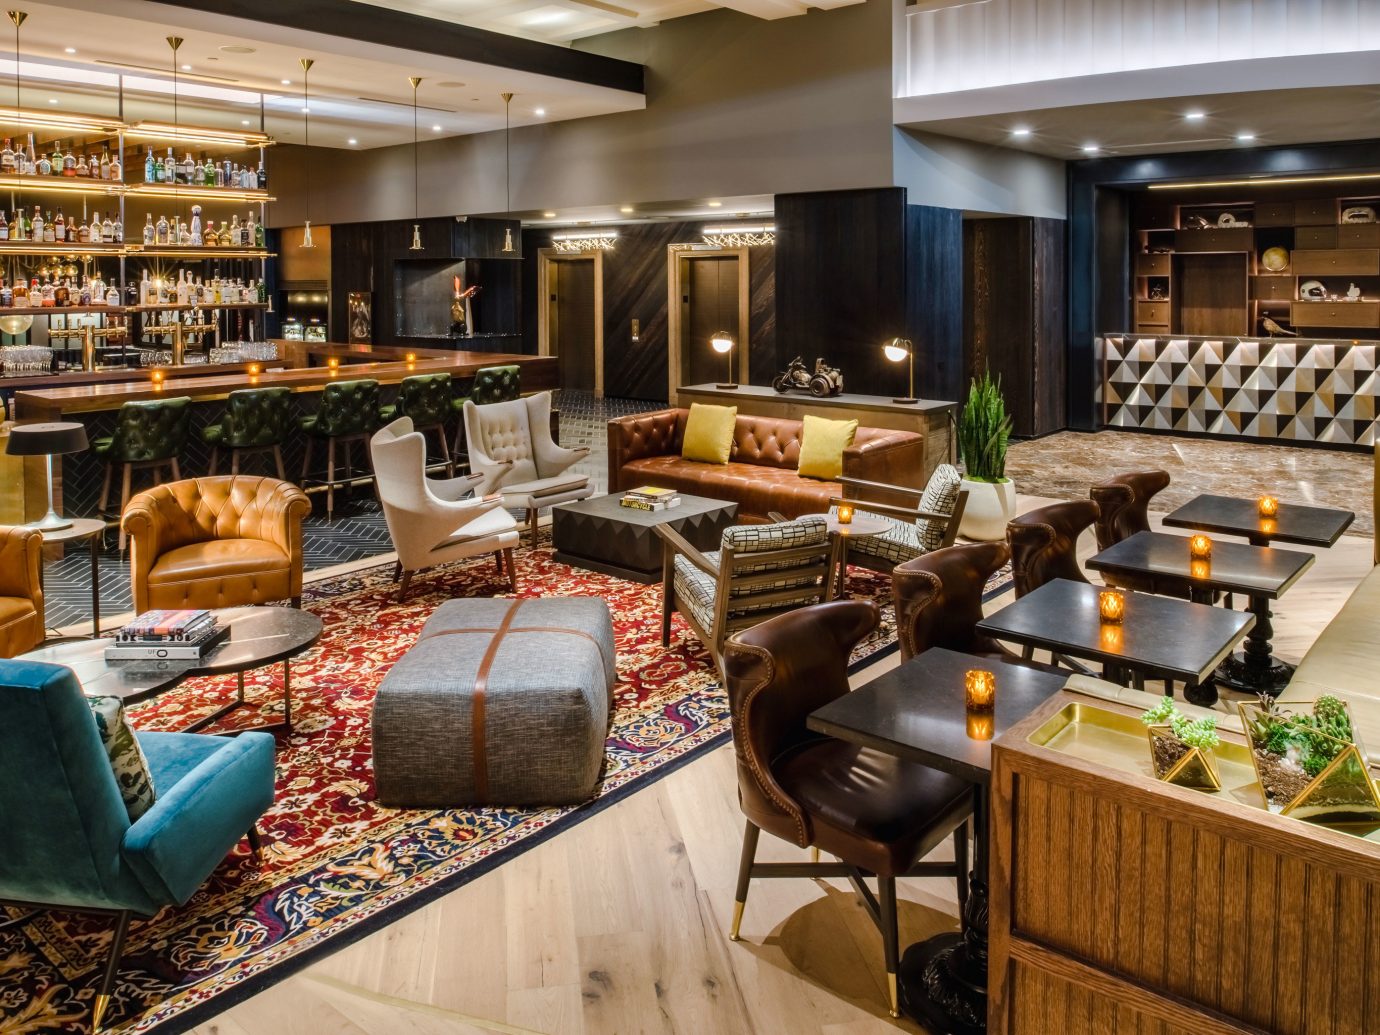 Boutique Hotels Hotels Luxury Travel table indoor ceiling Lobby interior design restaurant furniture